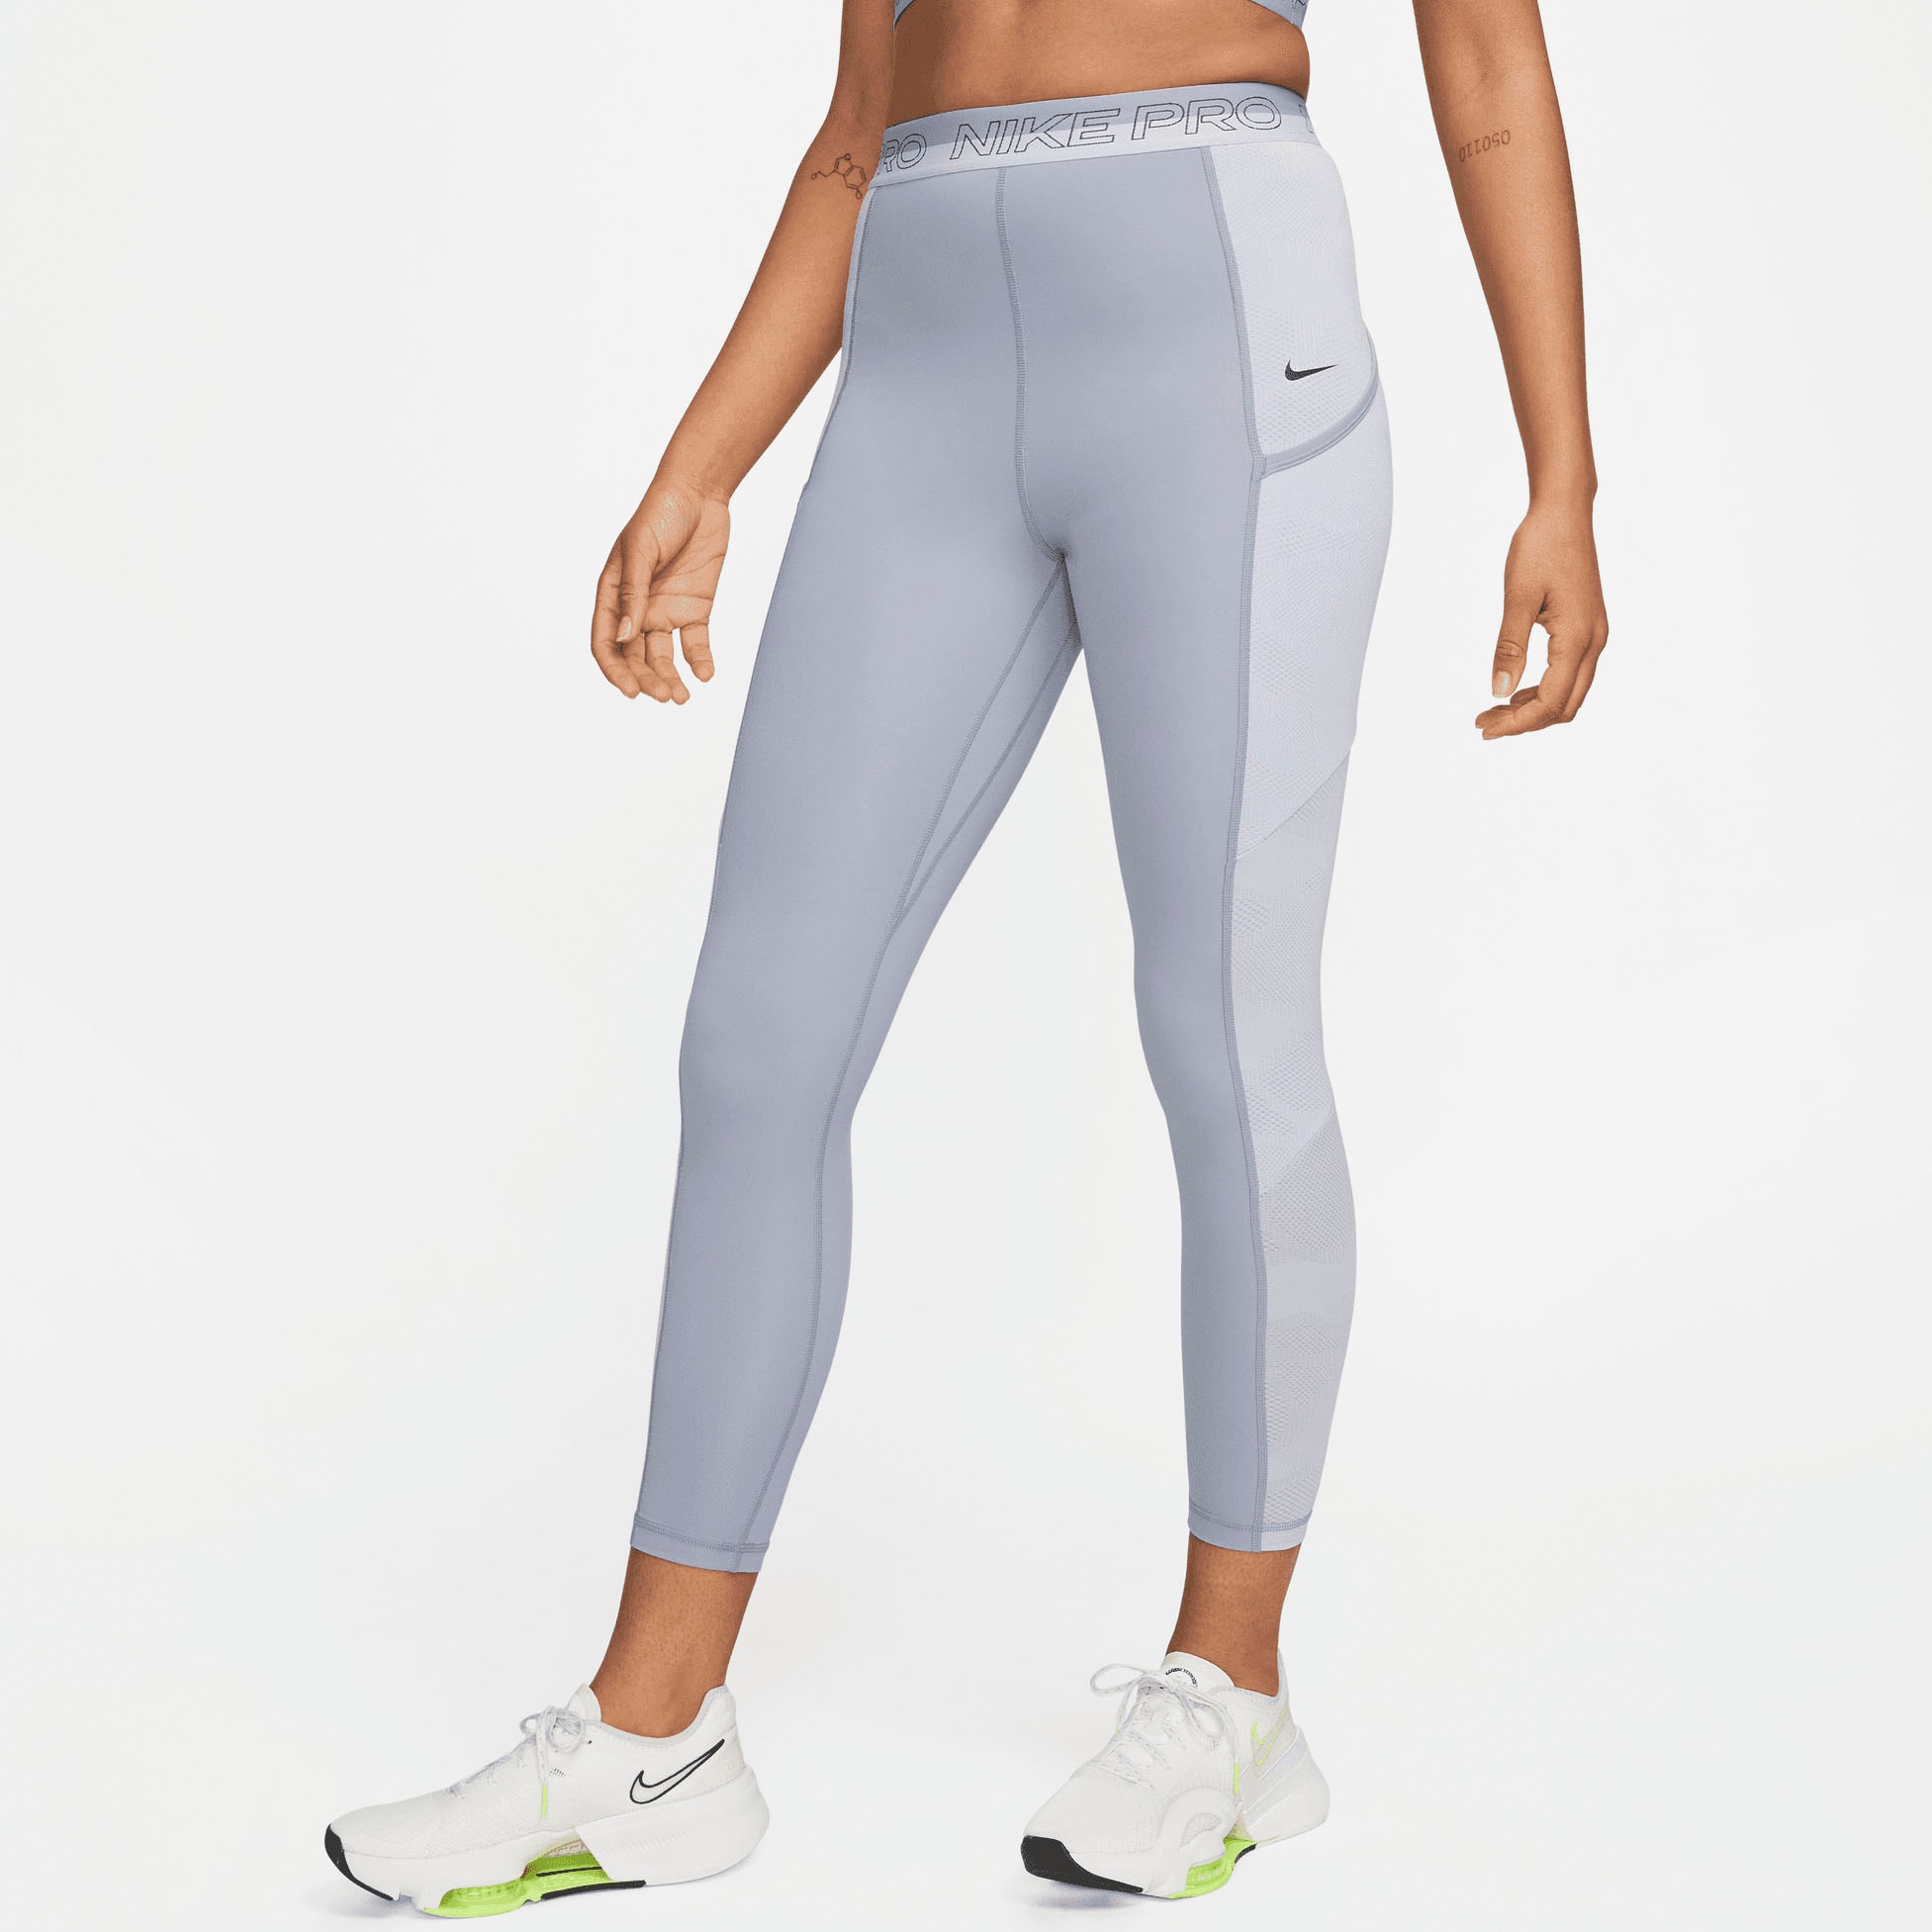 kaufen Nike im Dri-FIT Online OTTO »Pro Trainingstights / High-Waisted Leggings« Shop Women\'s